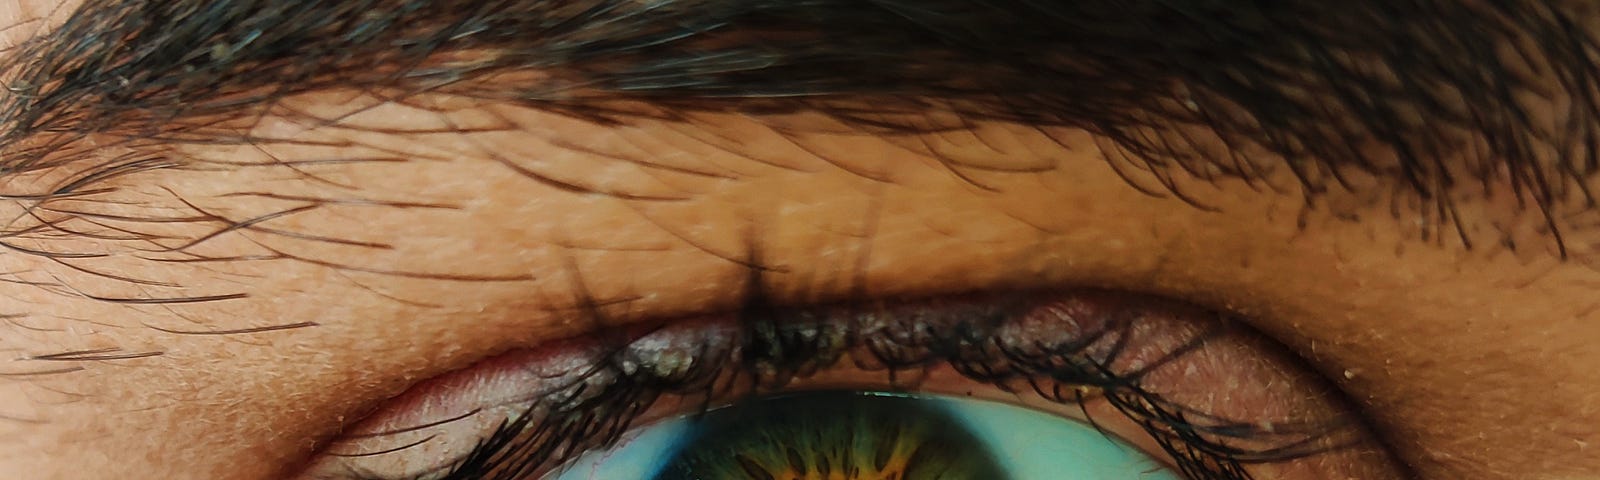 An intense close-up of a man’s eye, staring.